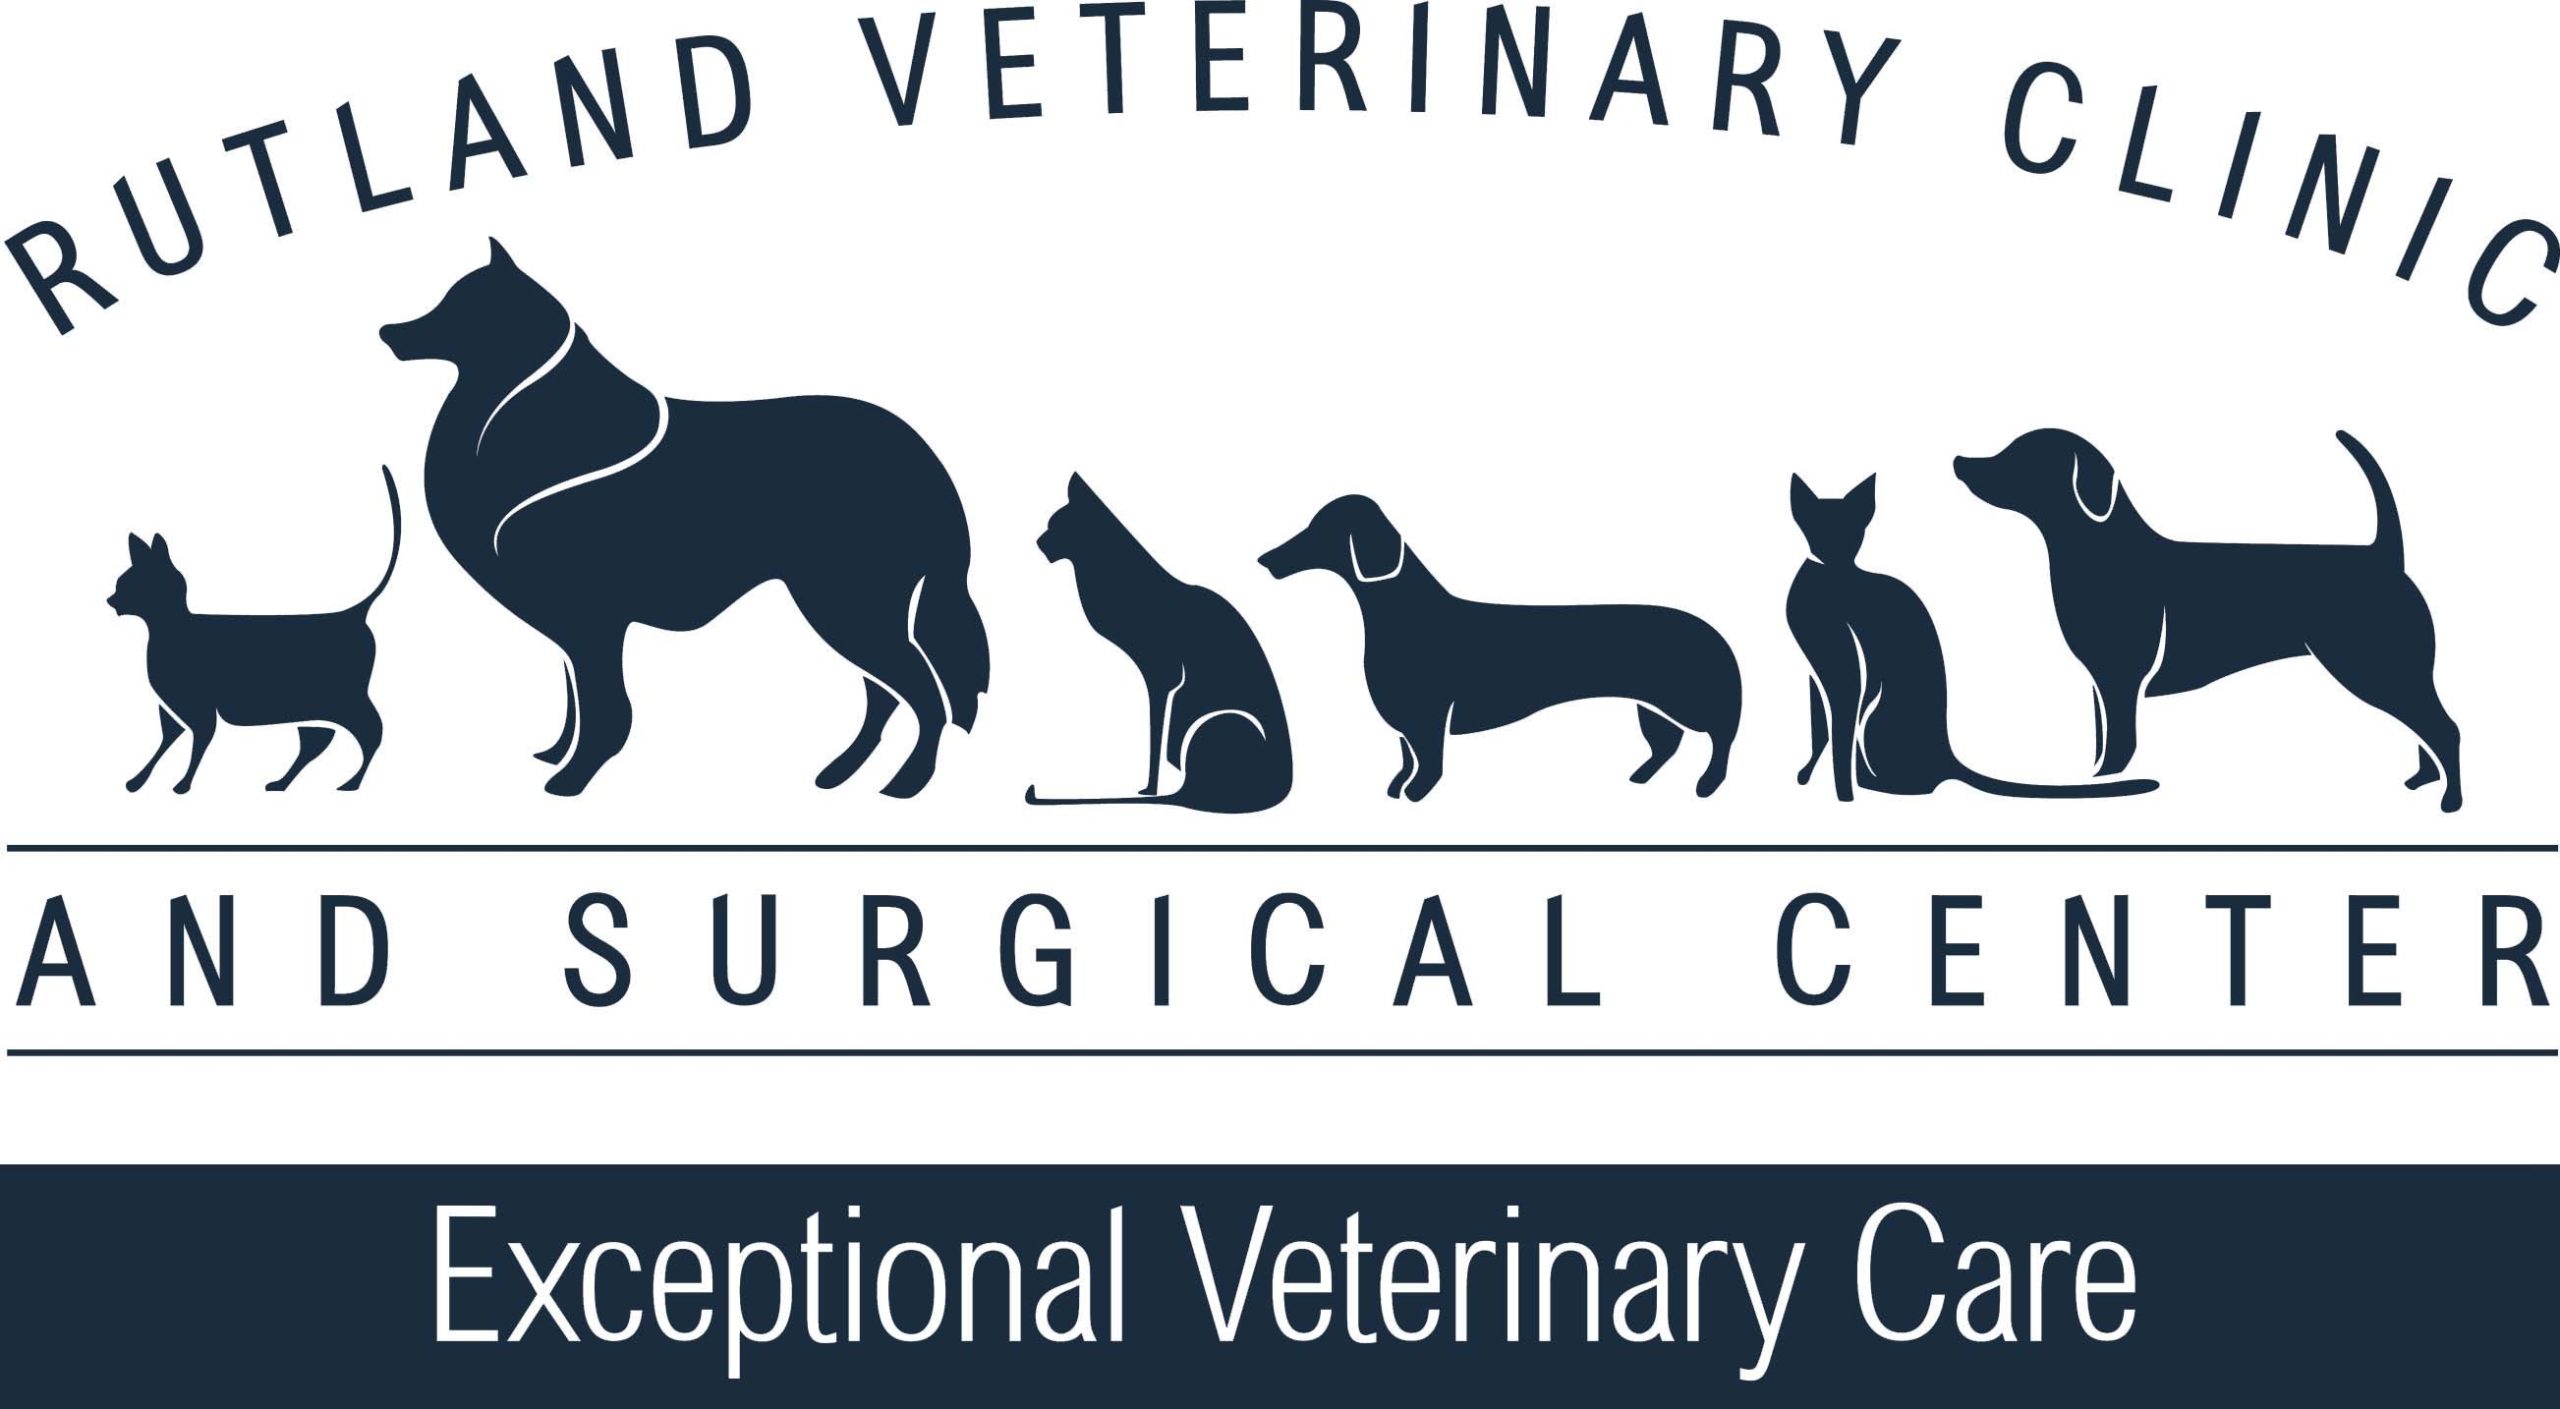 Rutland Veterinary Clinic & Surgical Center